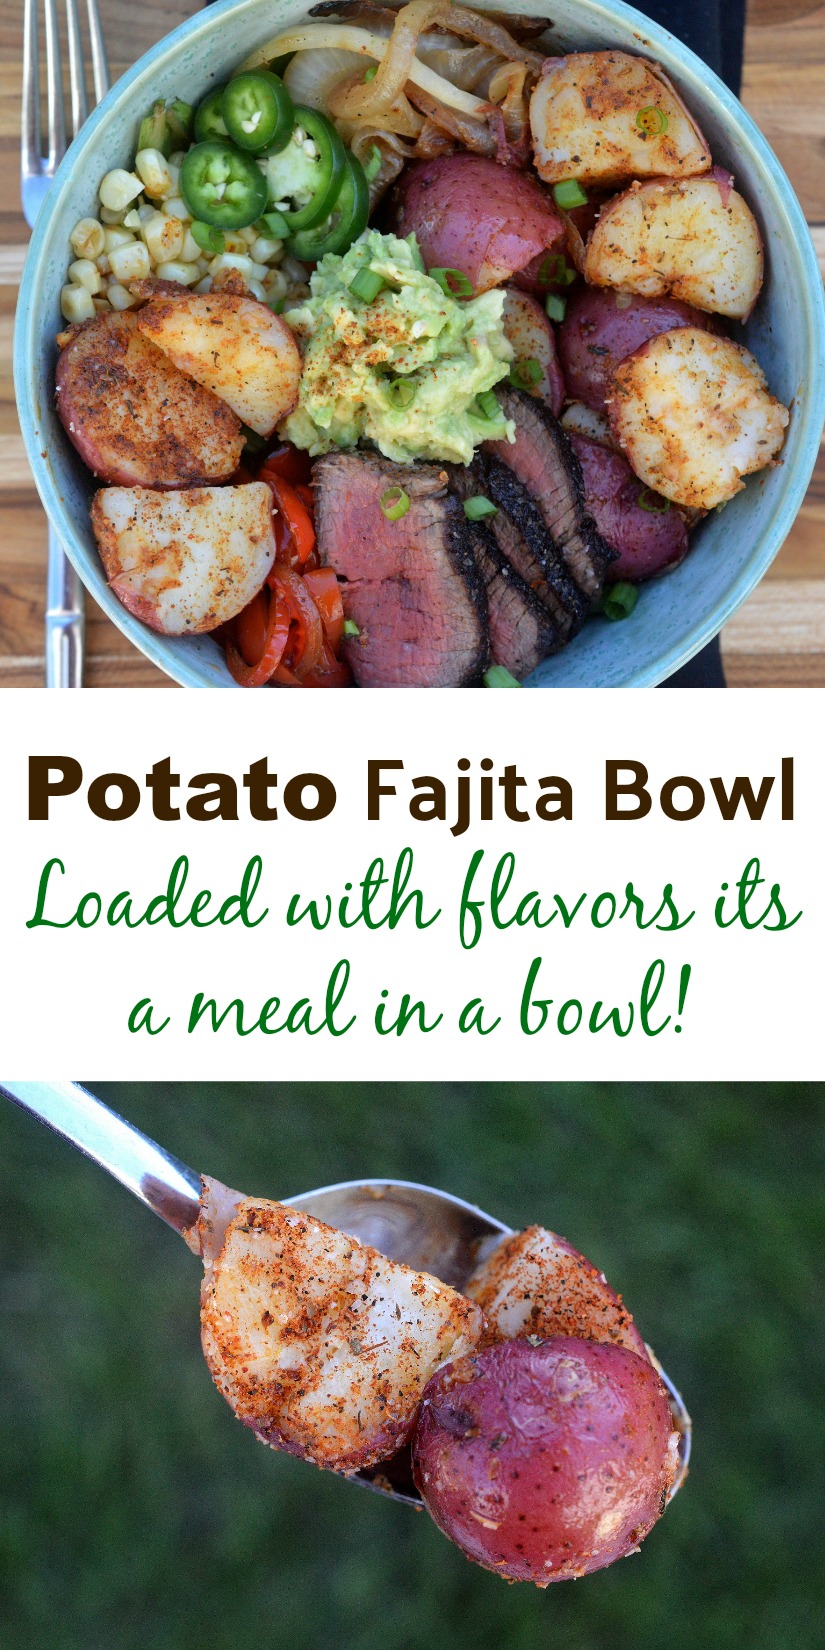 Potato Fajita Bowl is incredible full of flavor...Blackened Steak, Spiced Potatoes, Fried onions & peppers & more! 